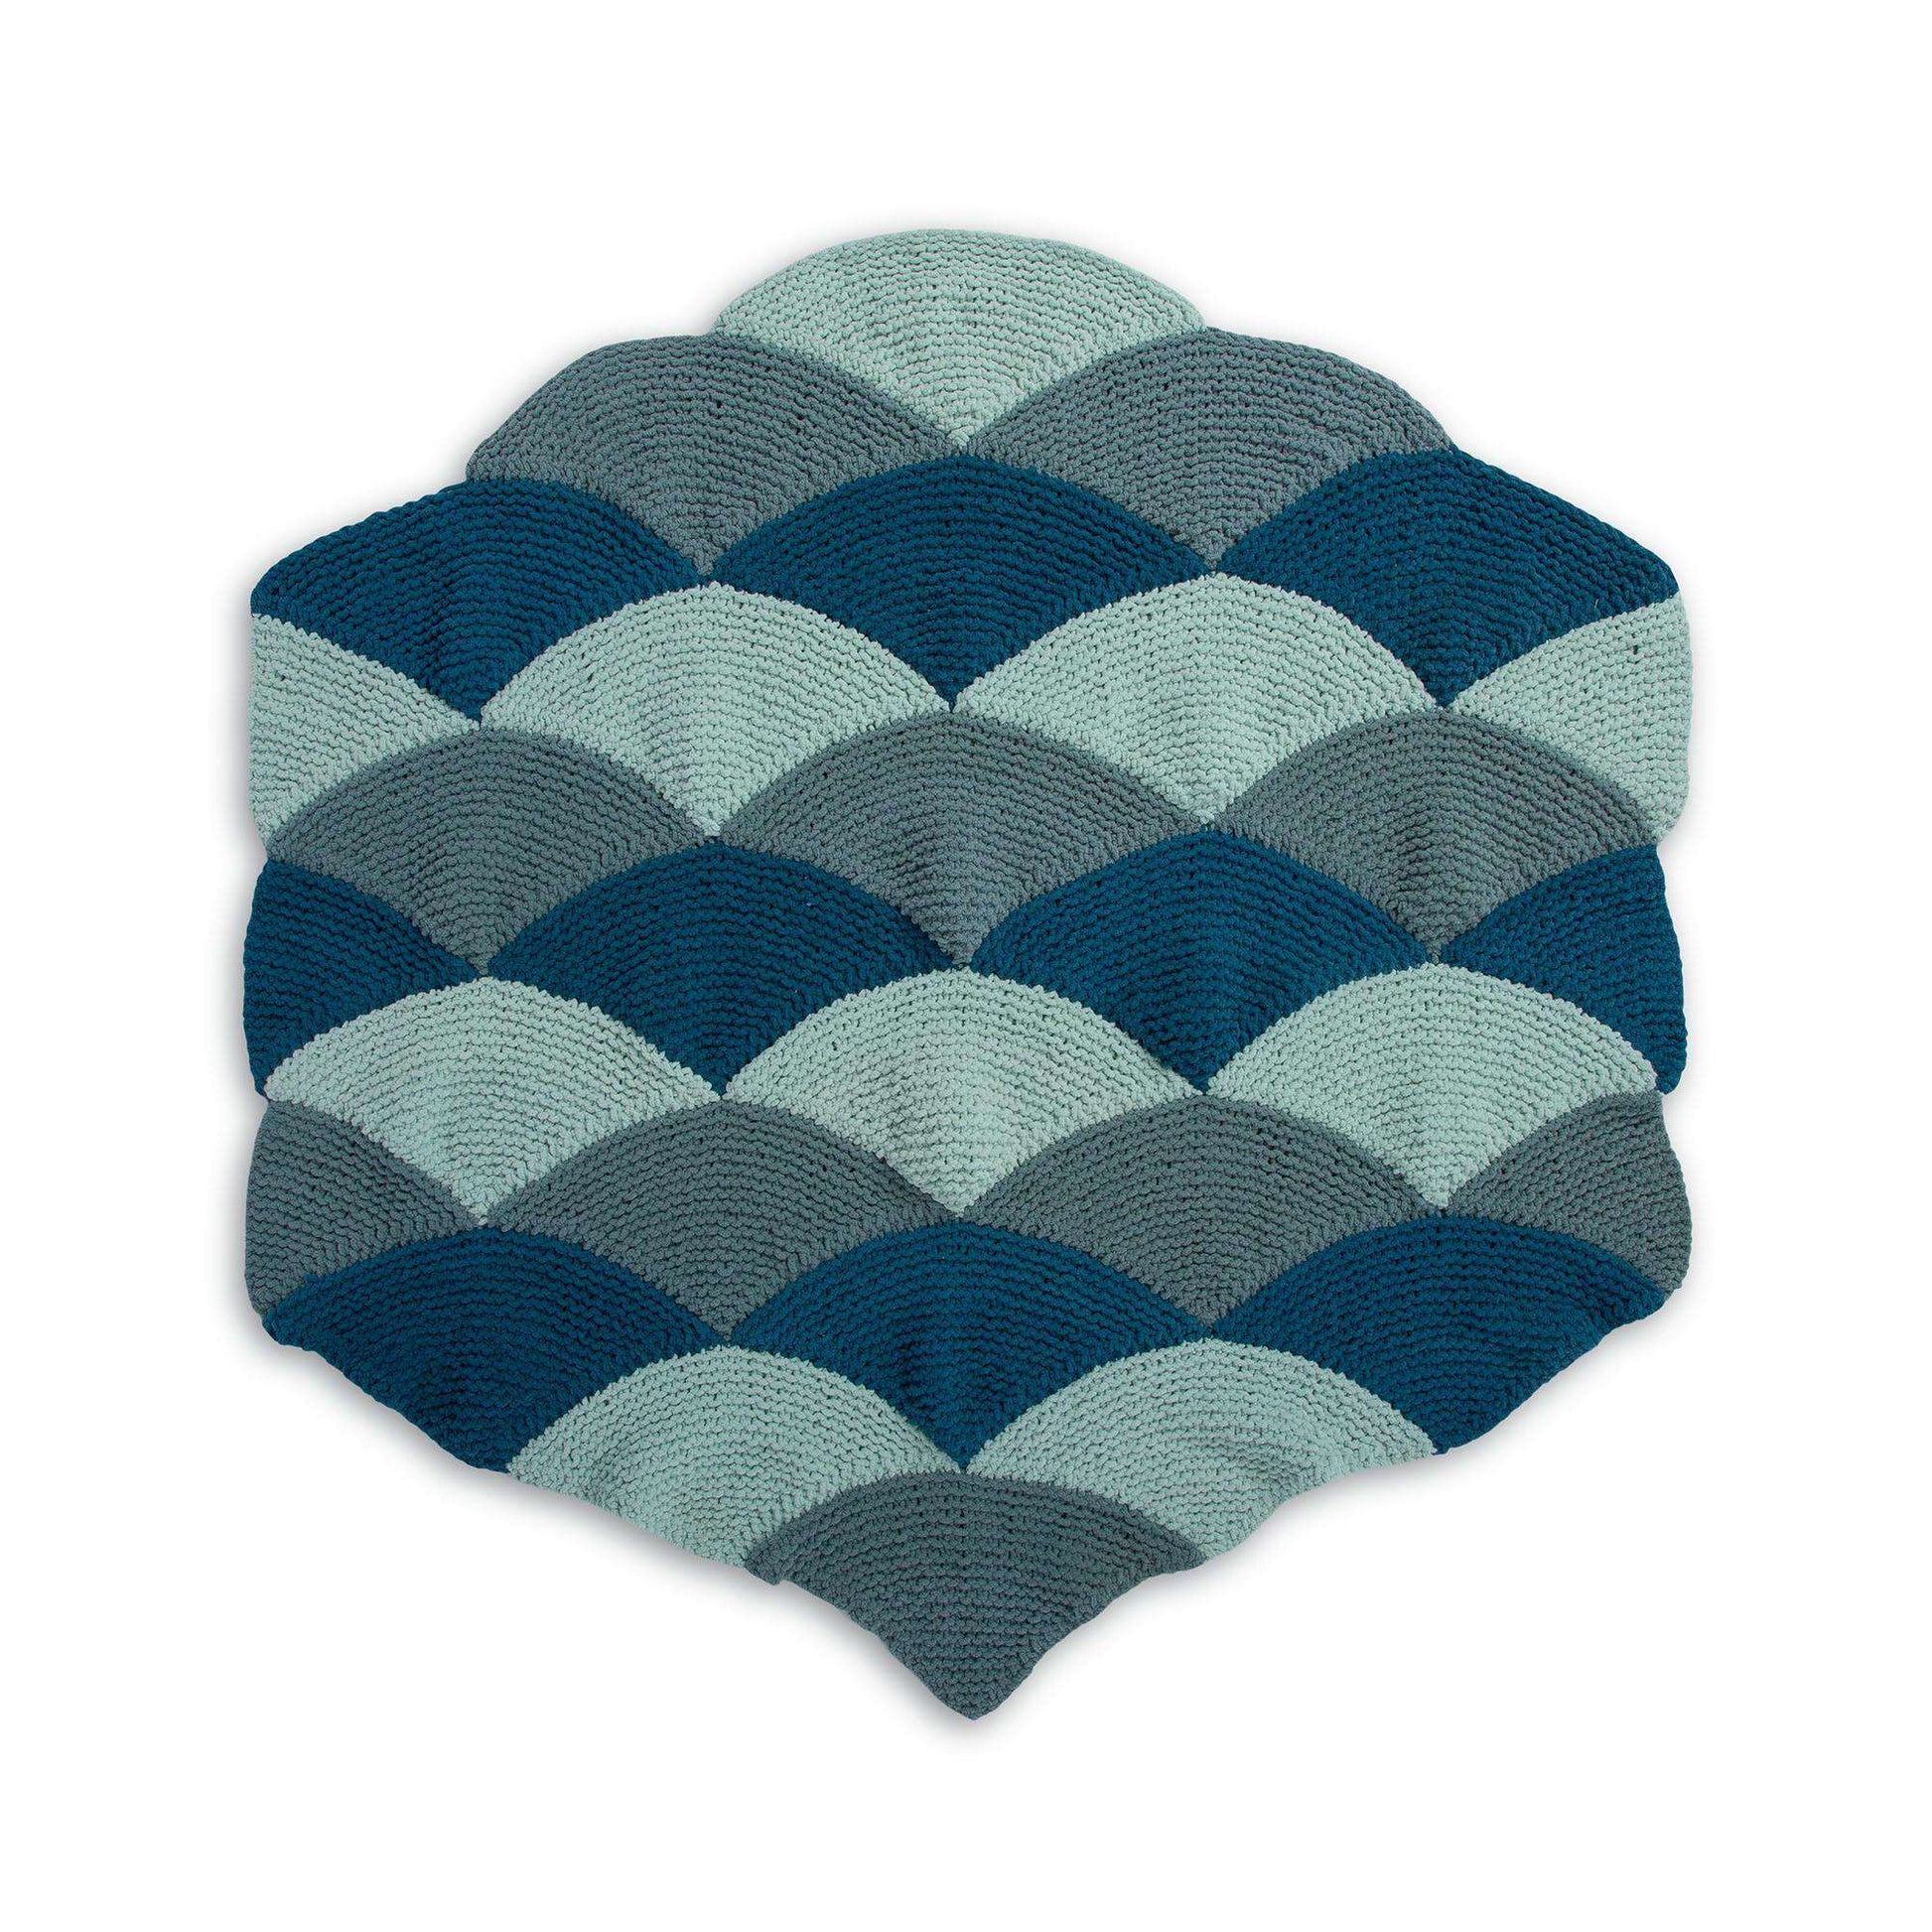 Free Bernat Knit Stacked Shells Blanket Pattern